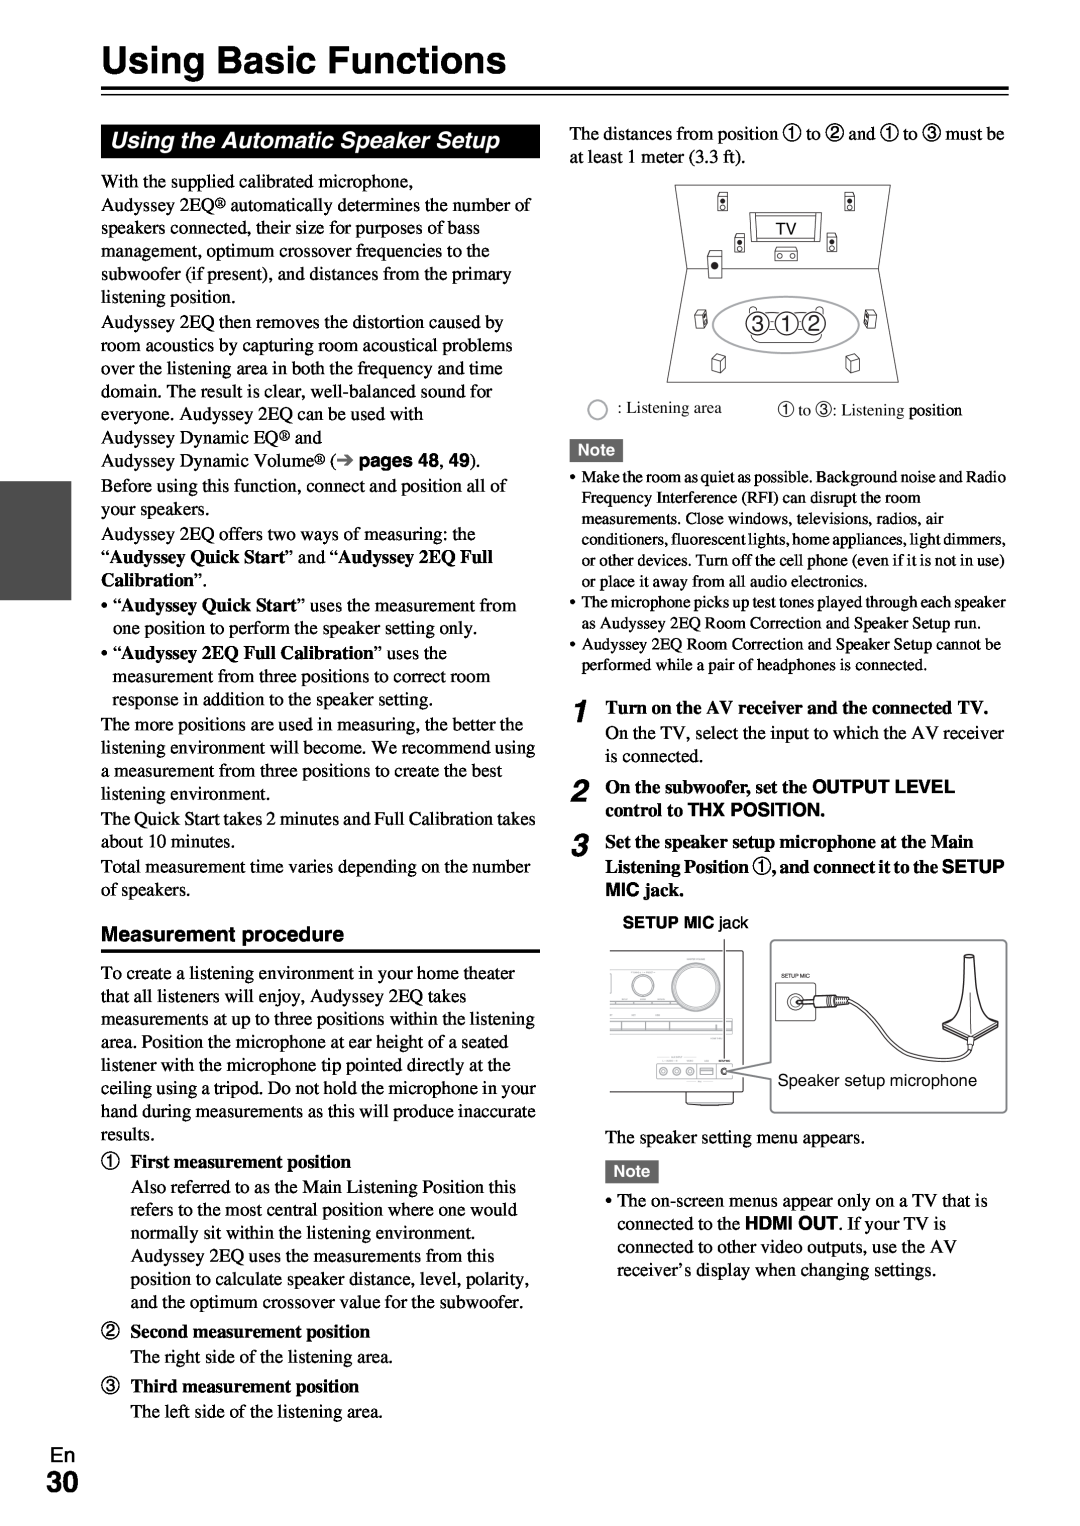 Onkyo HT-R990 instruction manual Using Basic Functions, Using the Automatic Speaker Setup, Measurement procedure 